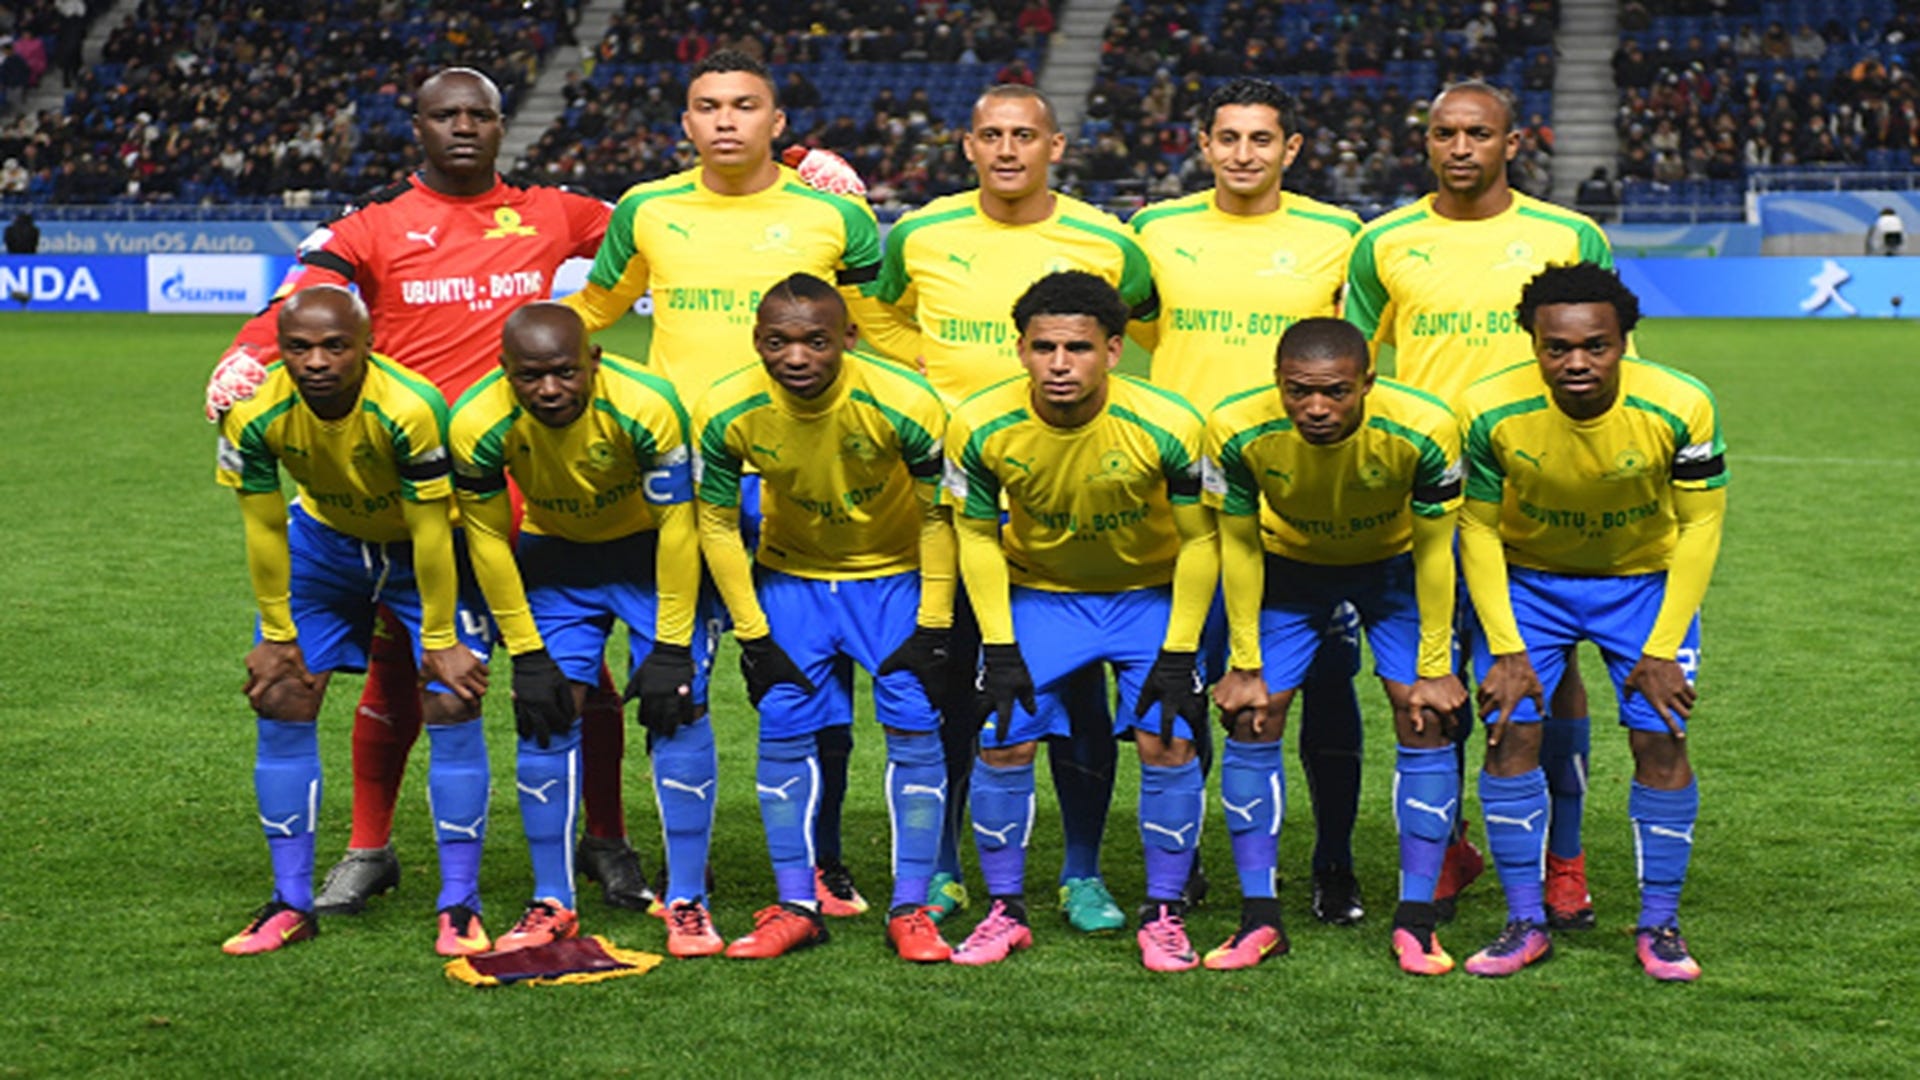 Mamelodi Sundowns team, Club World Cup